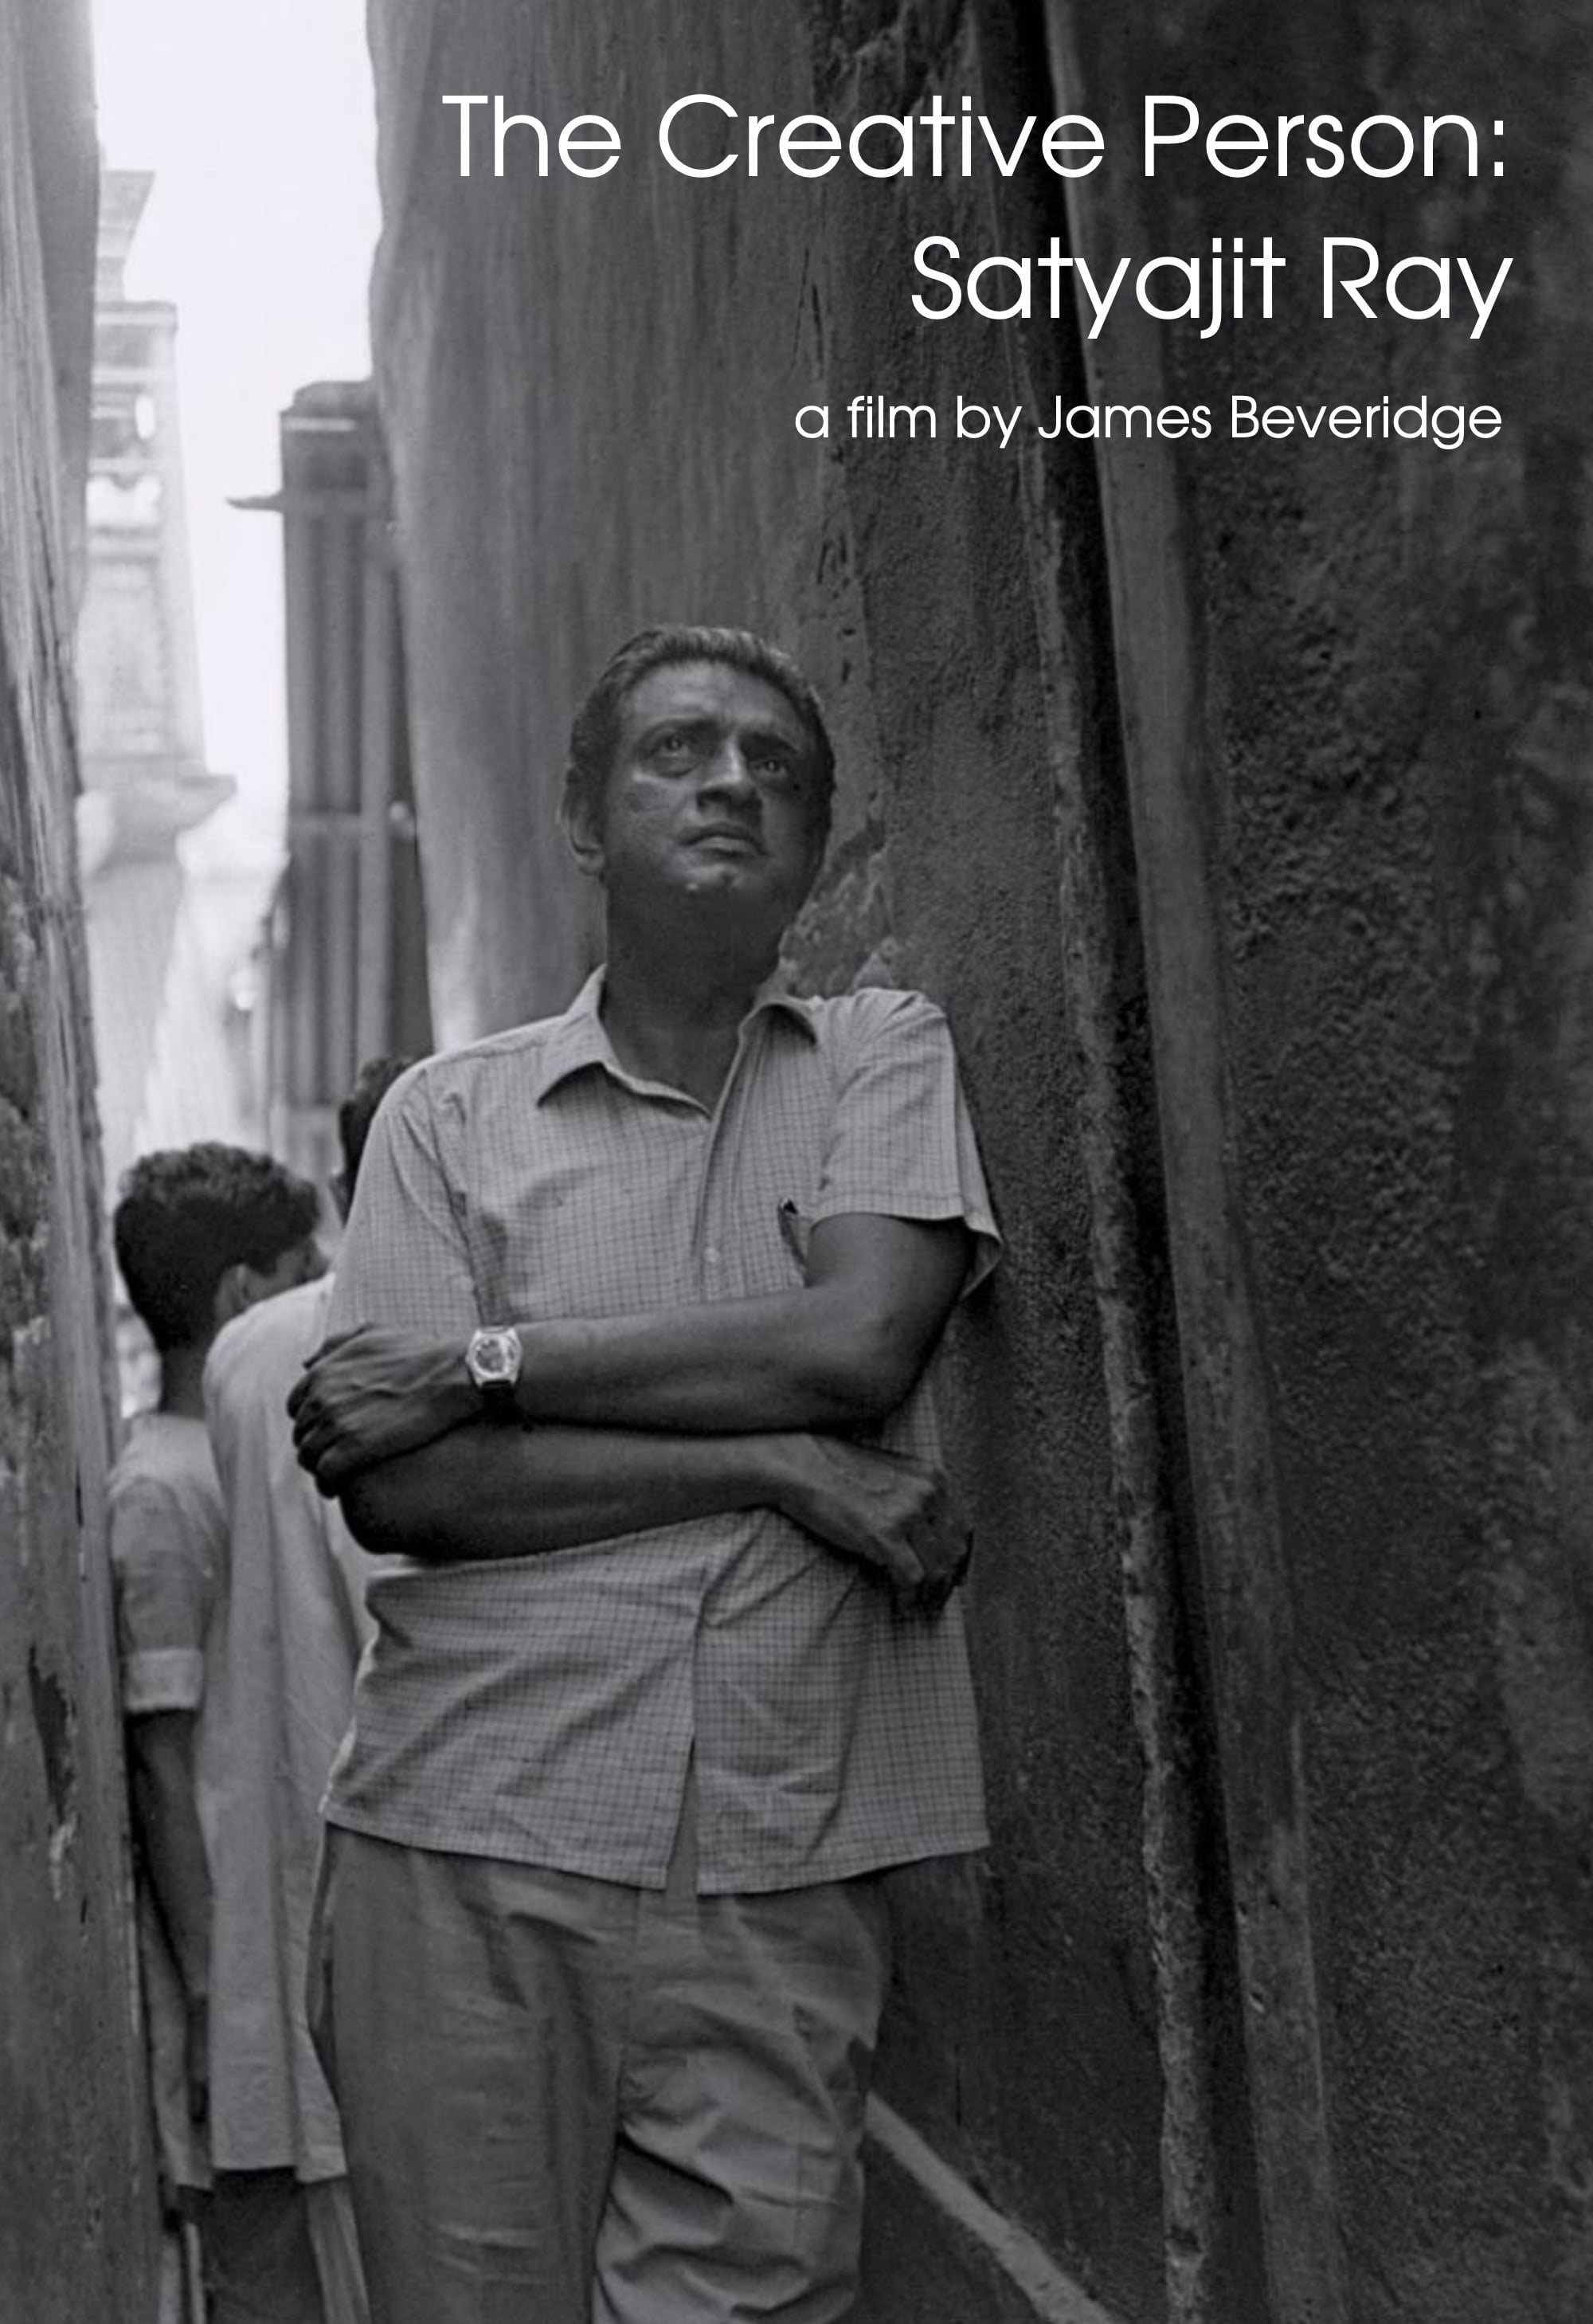 The Creative Person: Satyajit Ray